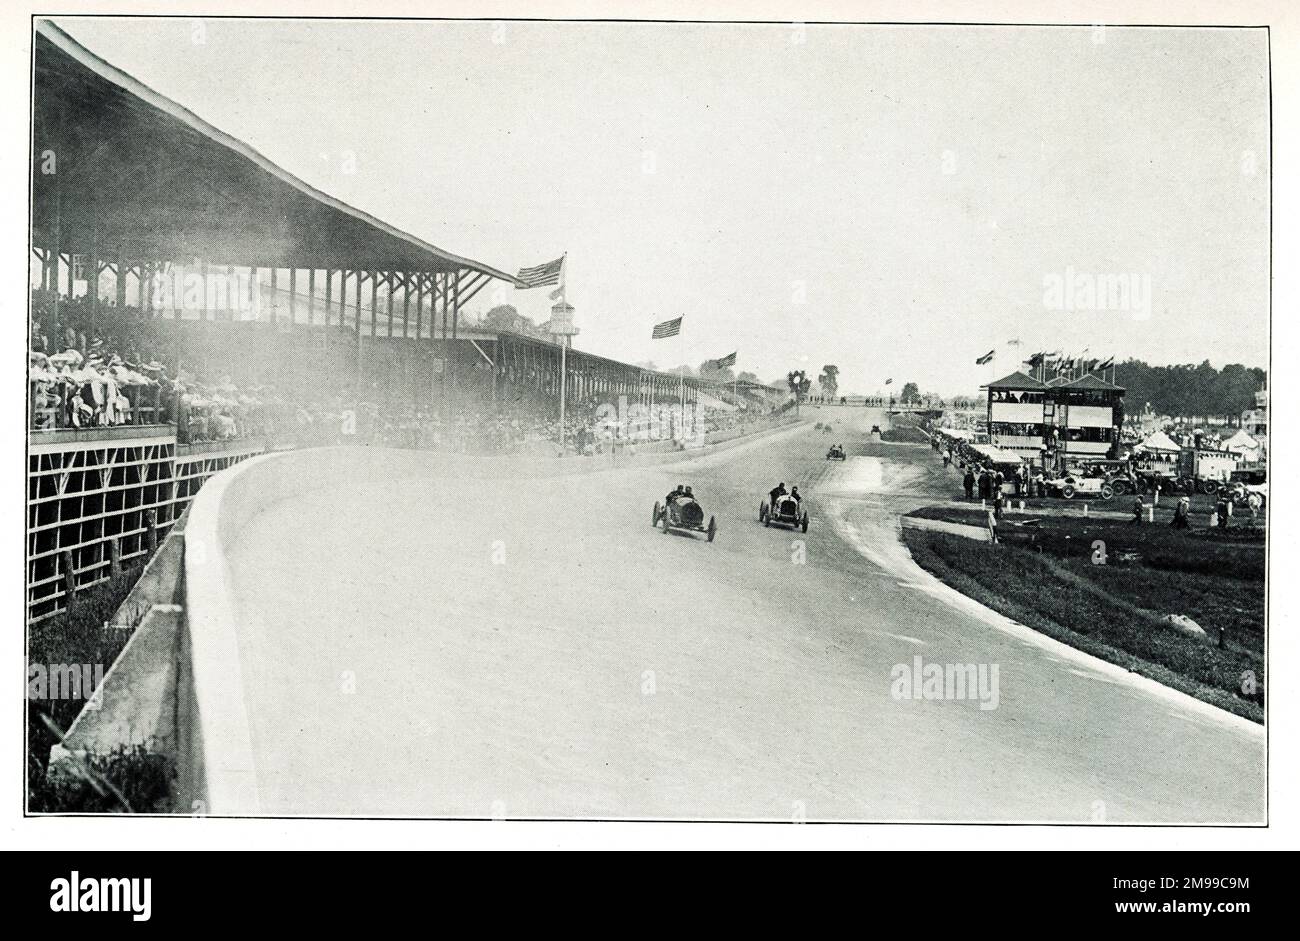 Indianapolis Motor Speedway und Grandstand, USA. Stockfoto